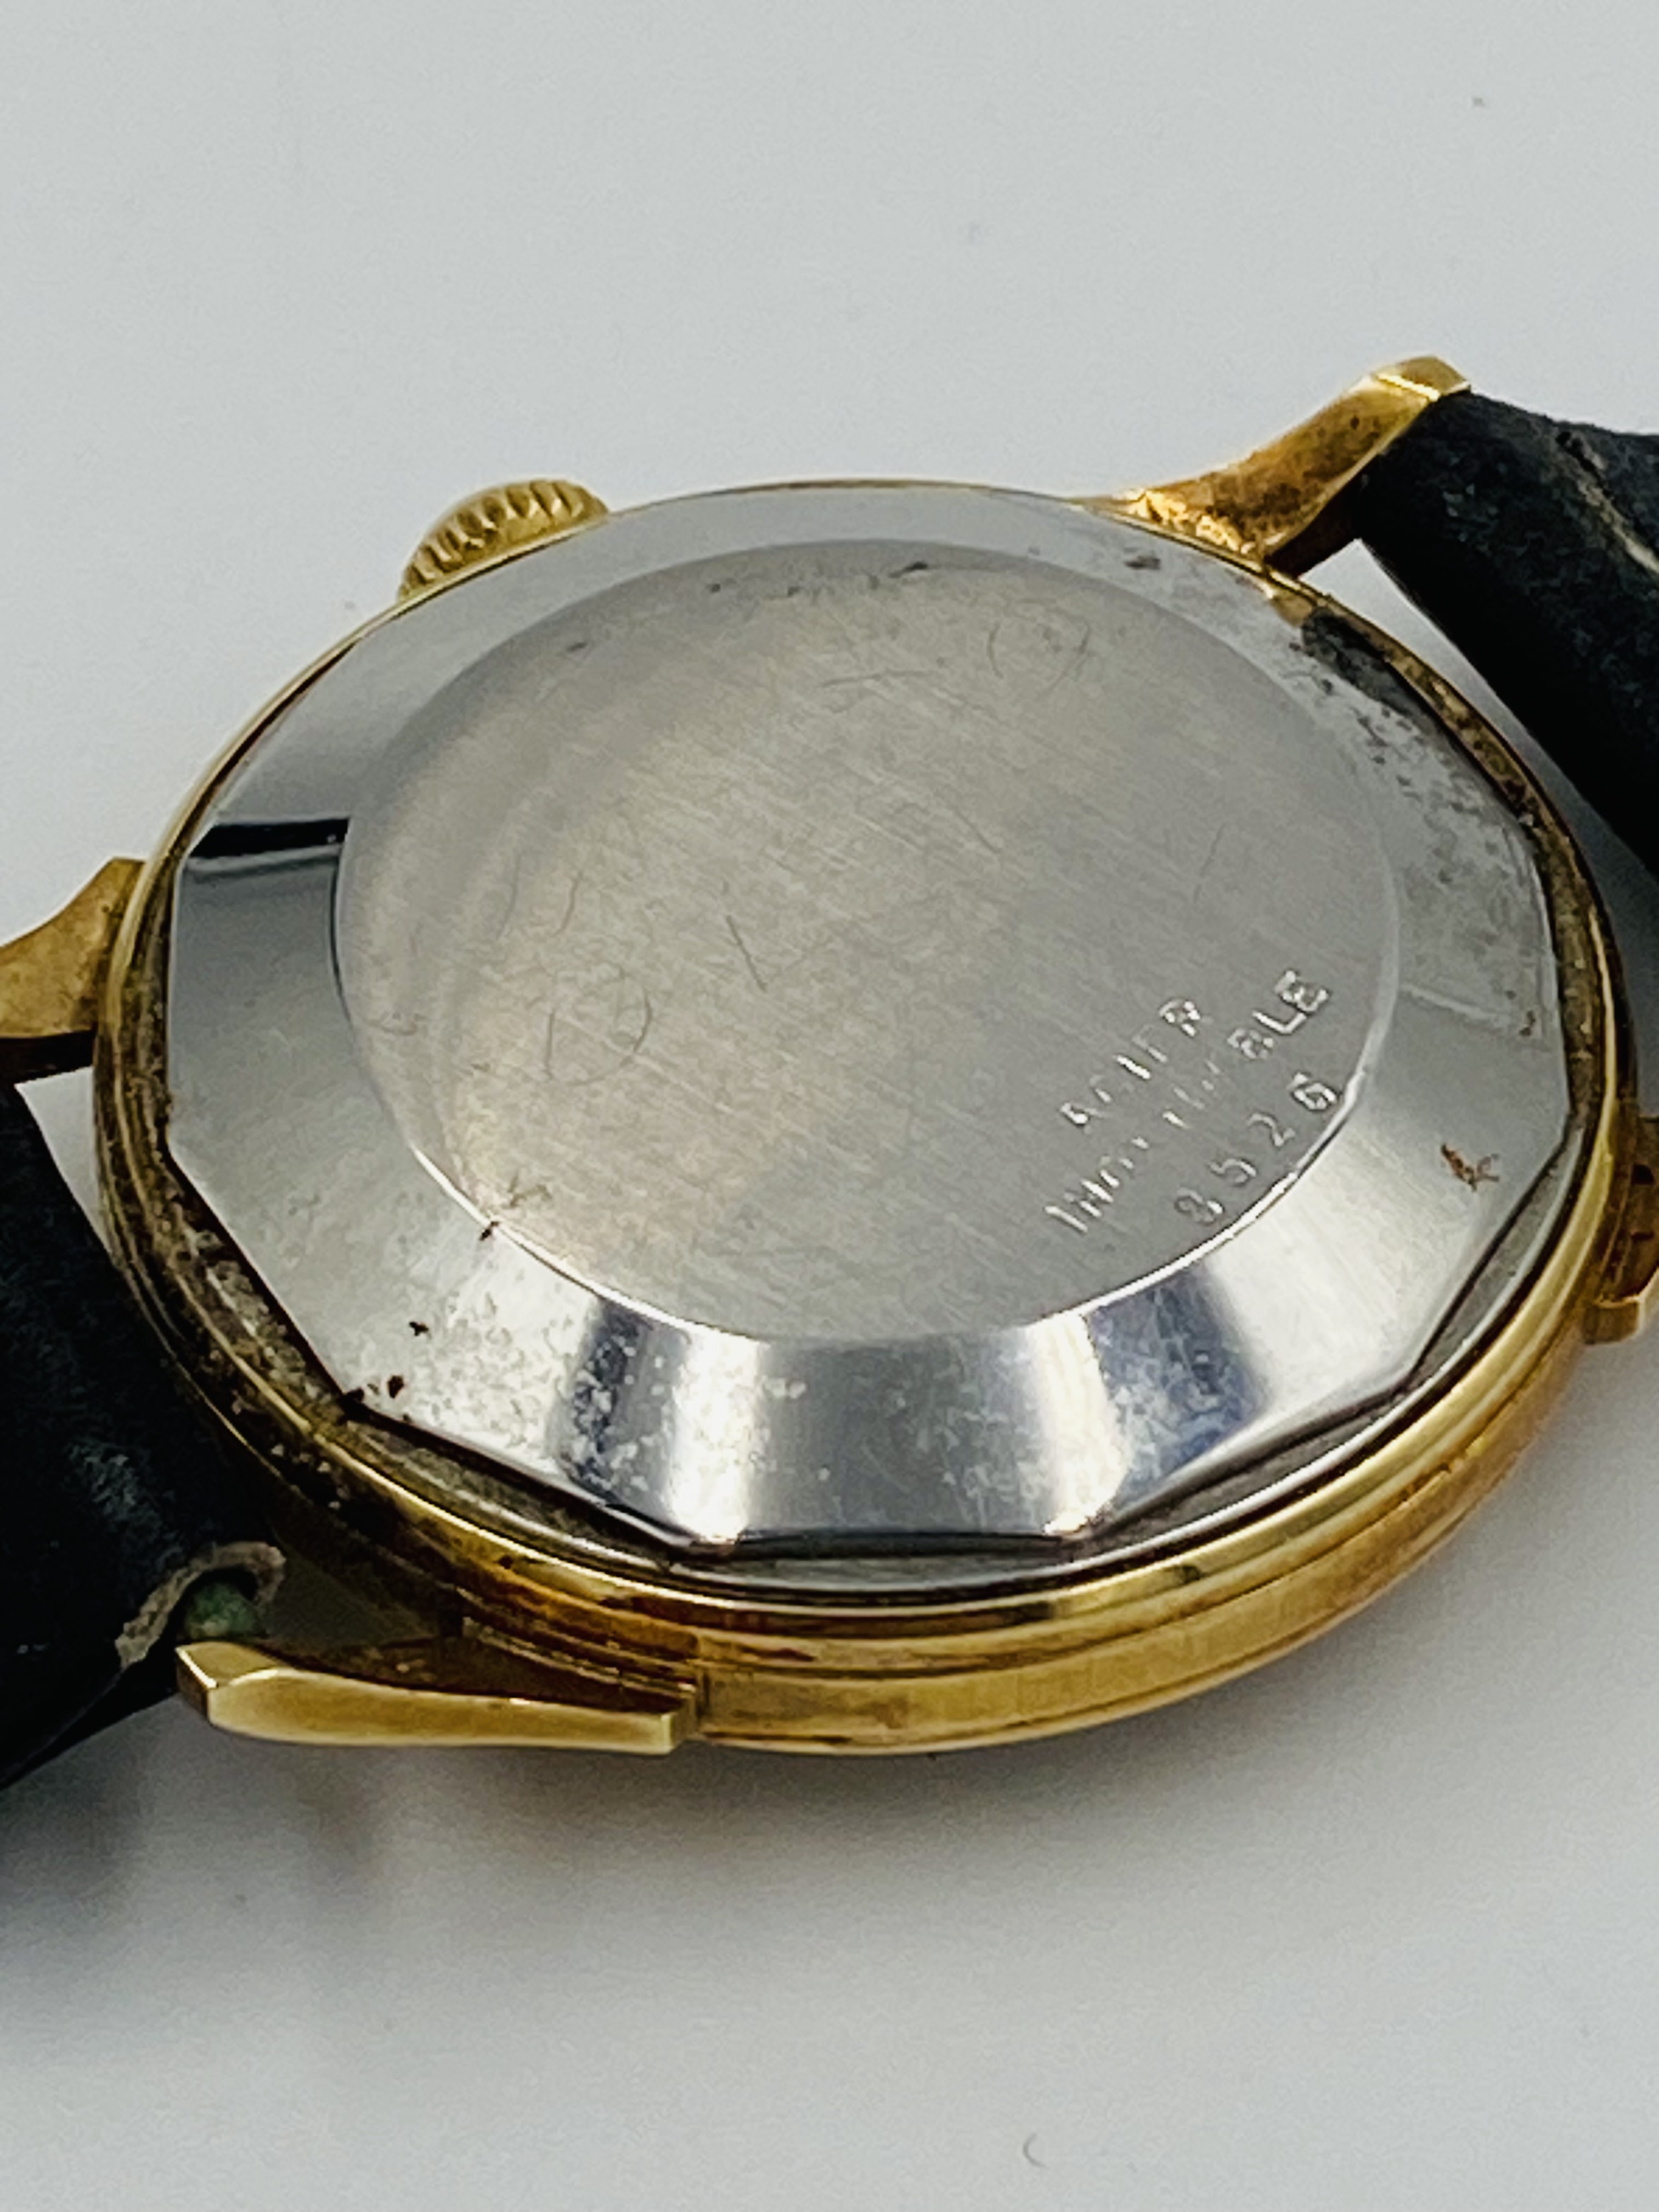 Cortebert automatic gents wristwatch - Image 3 of 4